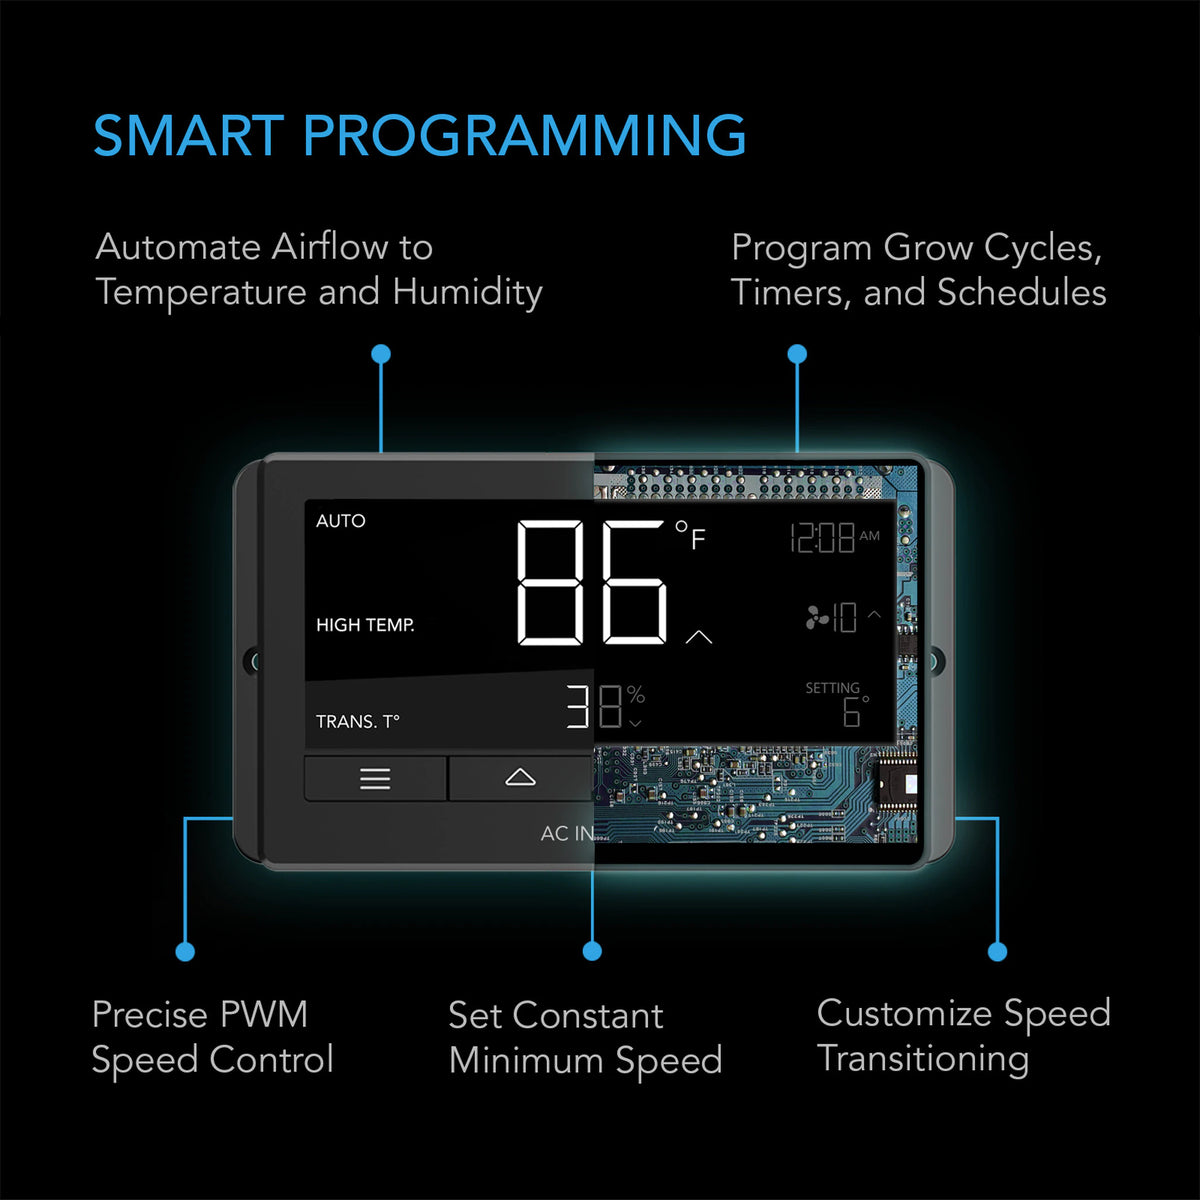 CLOUDCOM B2, Smart Thermo-Hygrometer with Data App, Integrated Sensor Probe  - AC Infinity